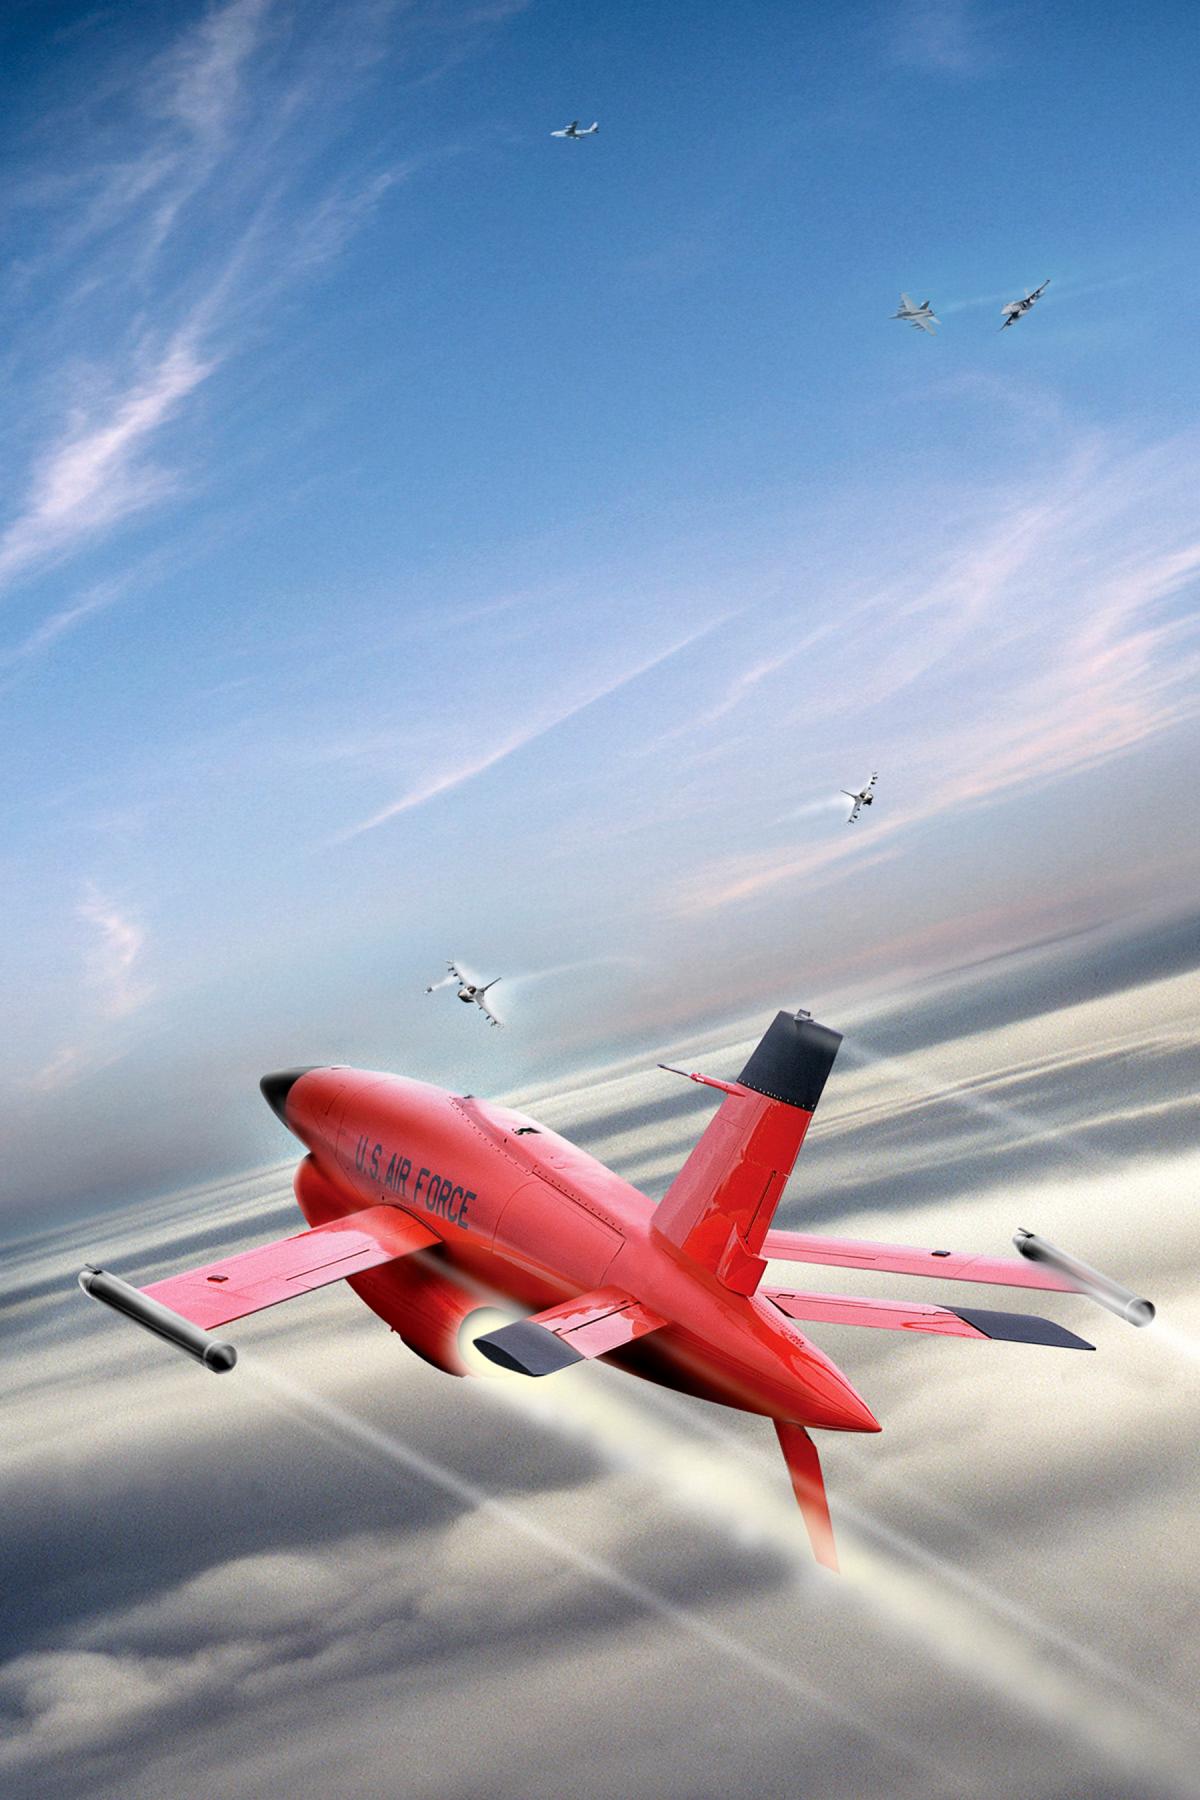 Concept art of a Firebee target drone in flight